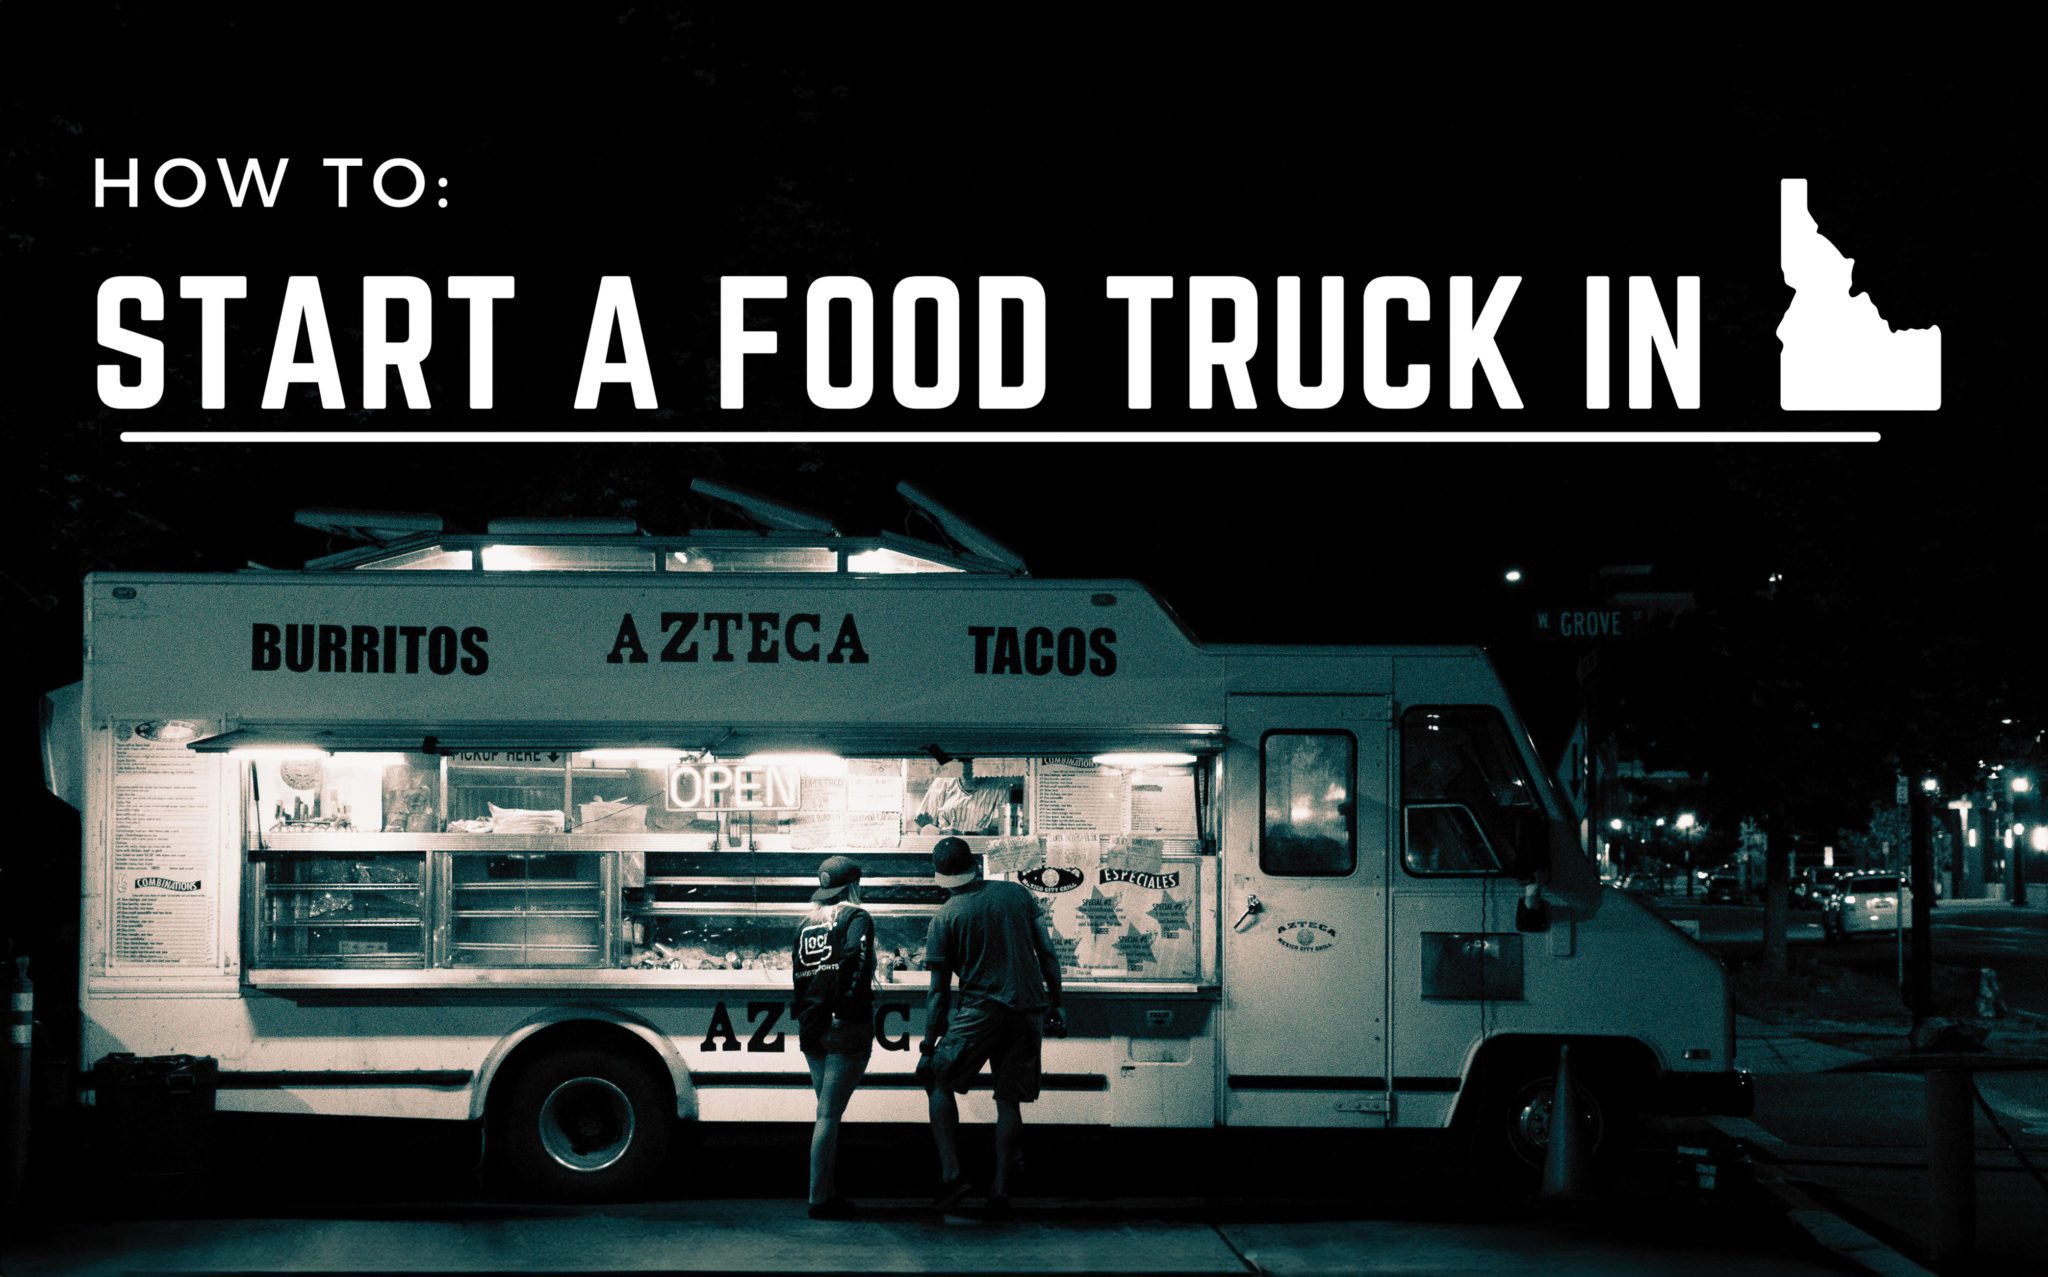 Customers ordering at Azteca Tacos food truck in Idaho at night.